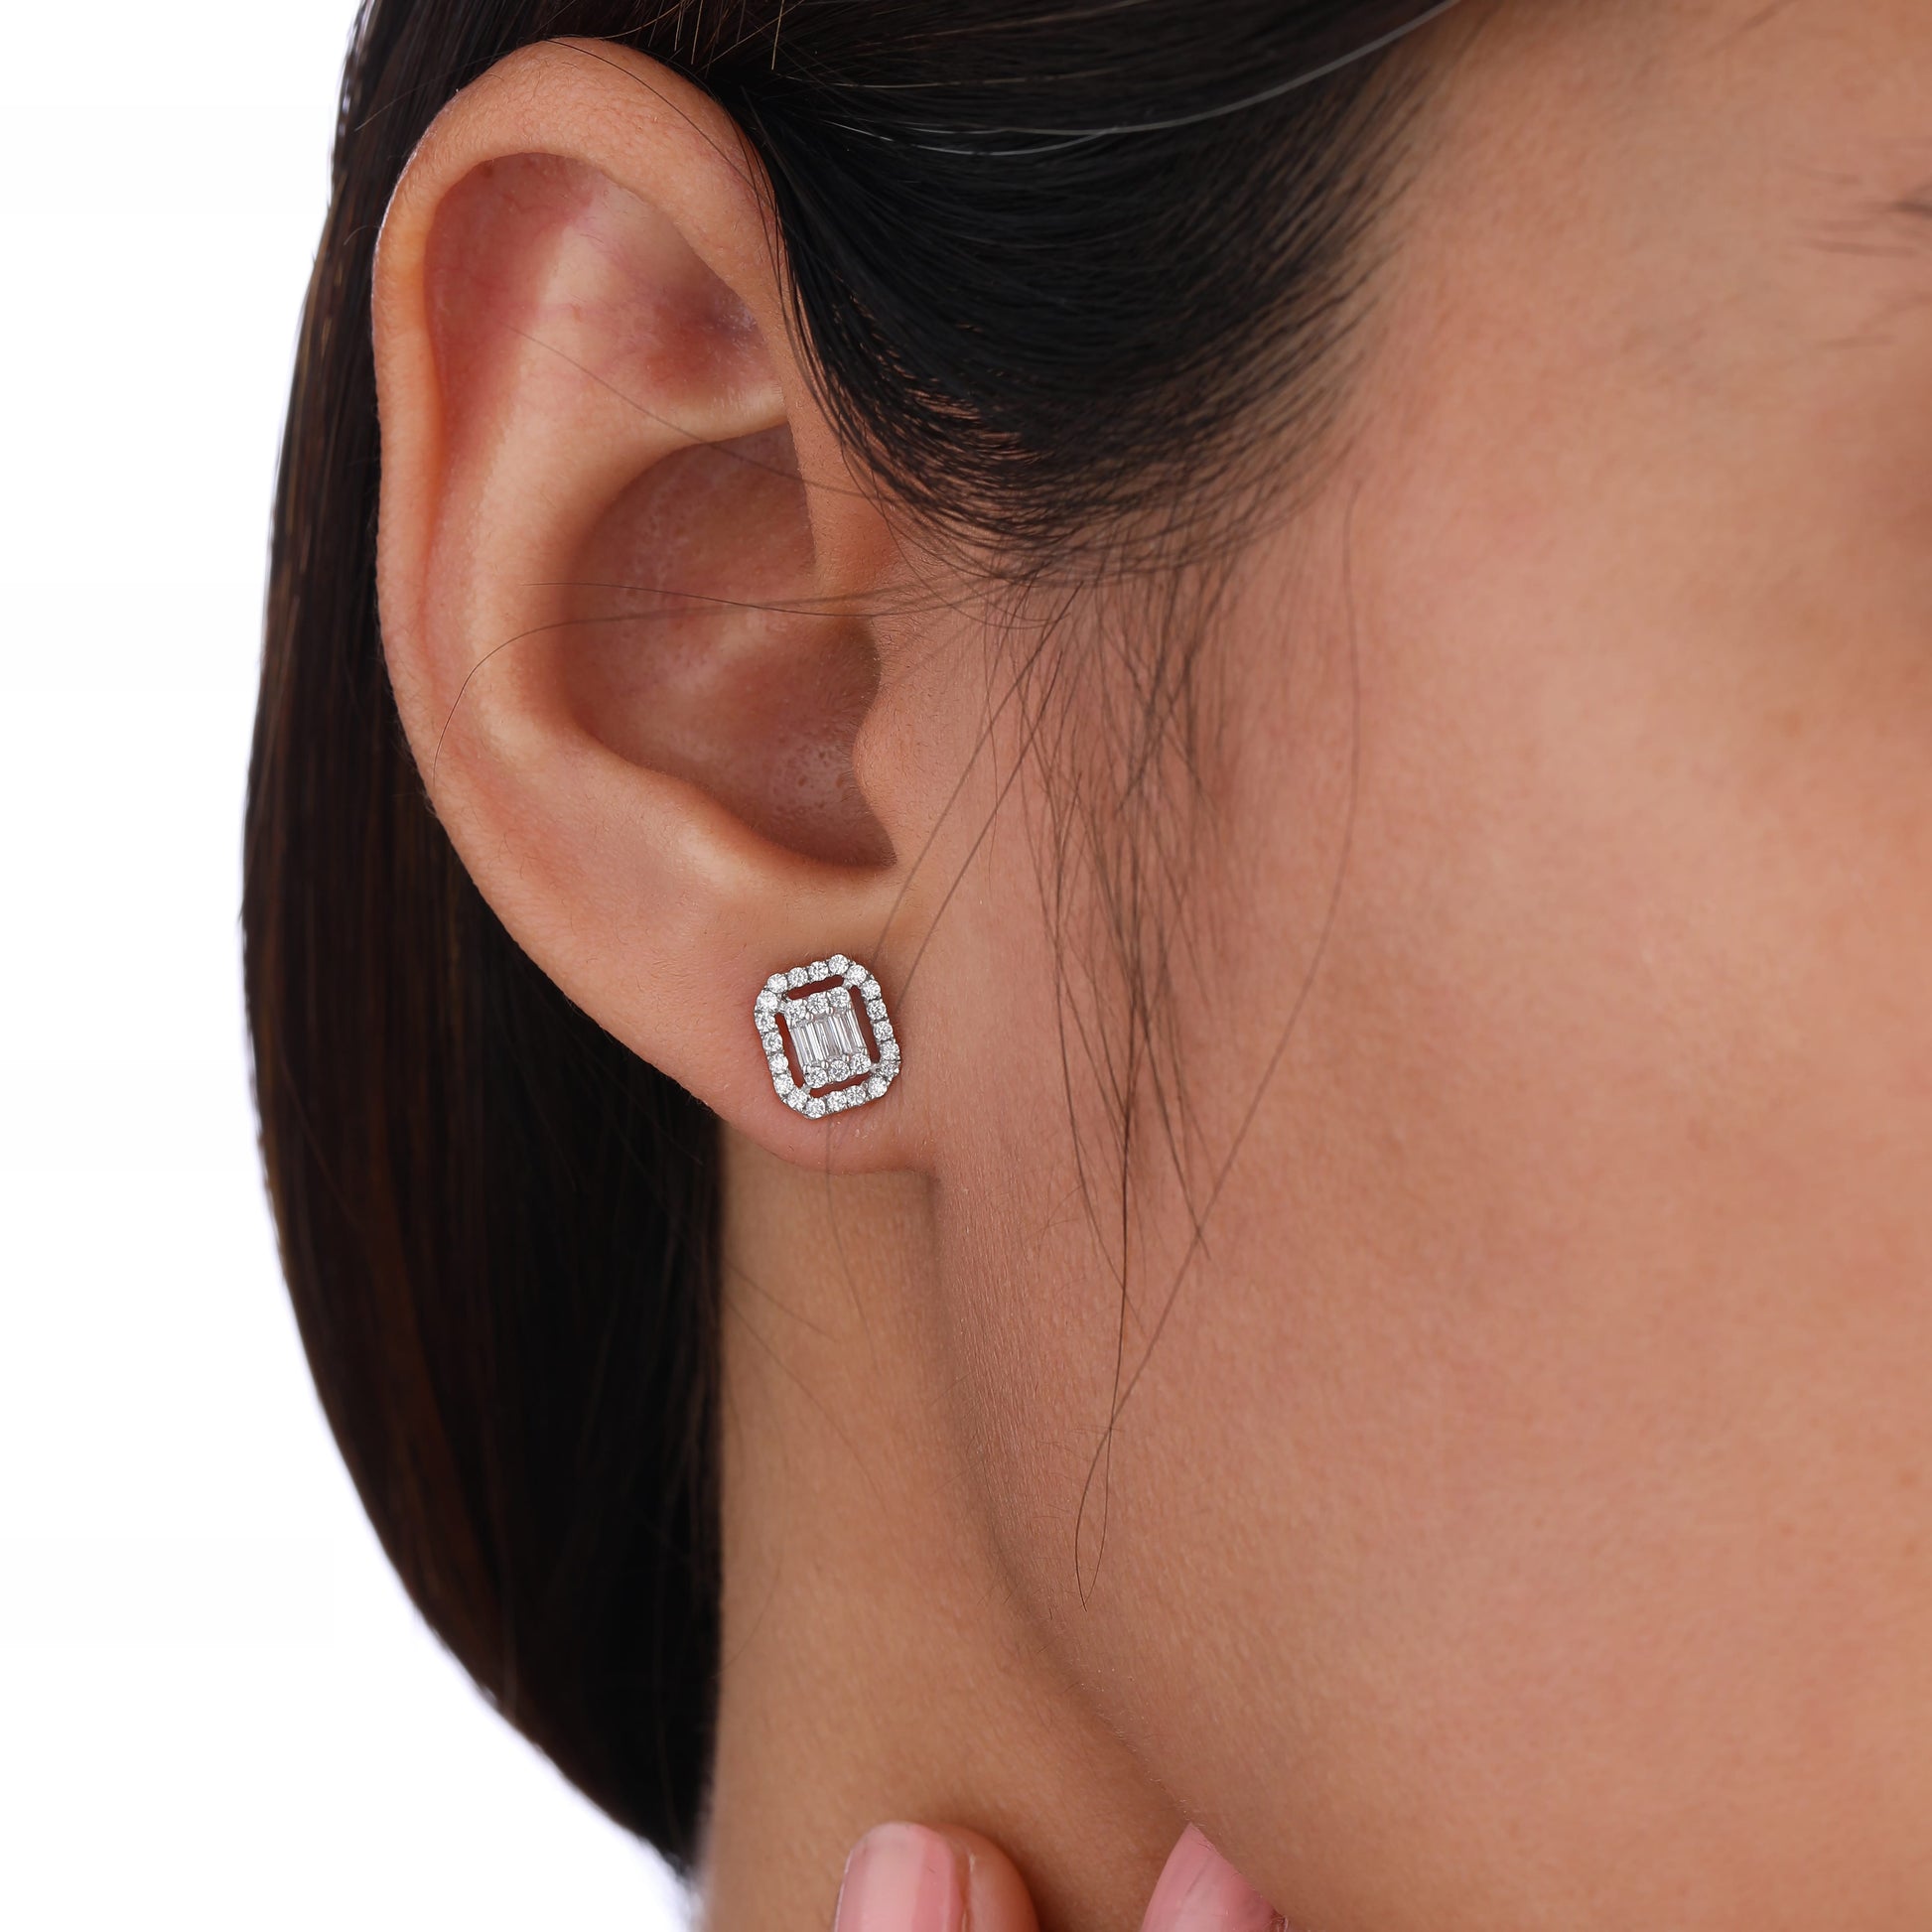 a person wearing stud earring